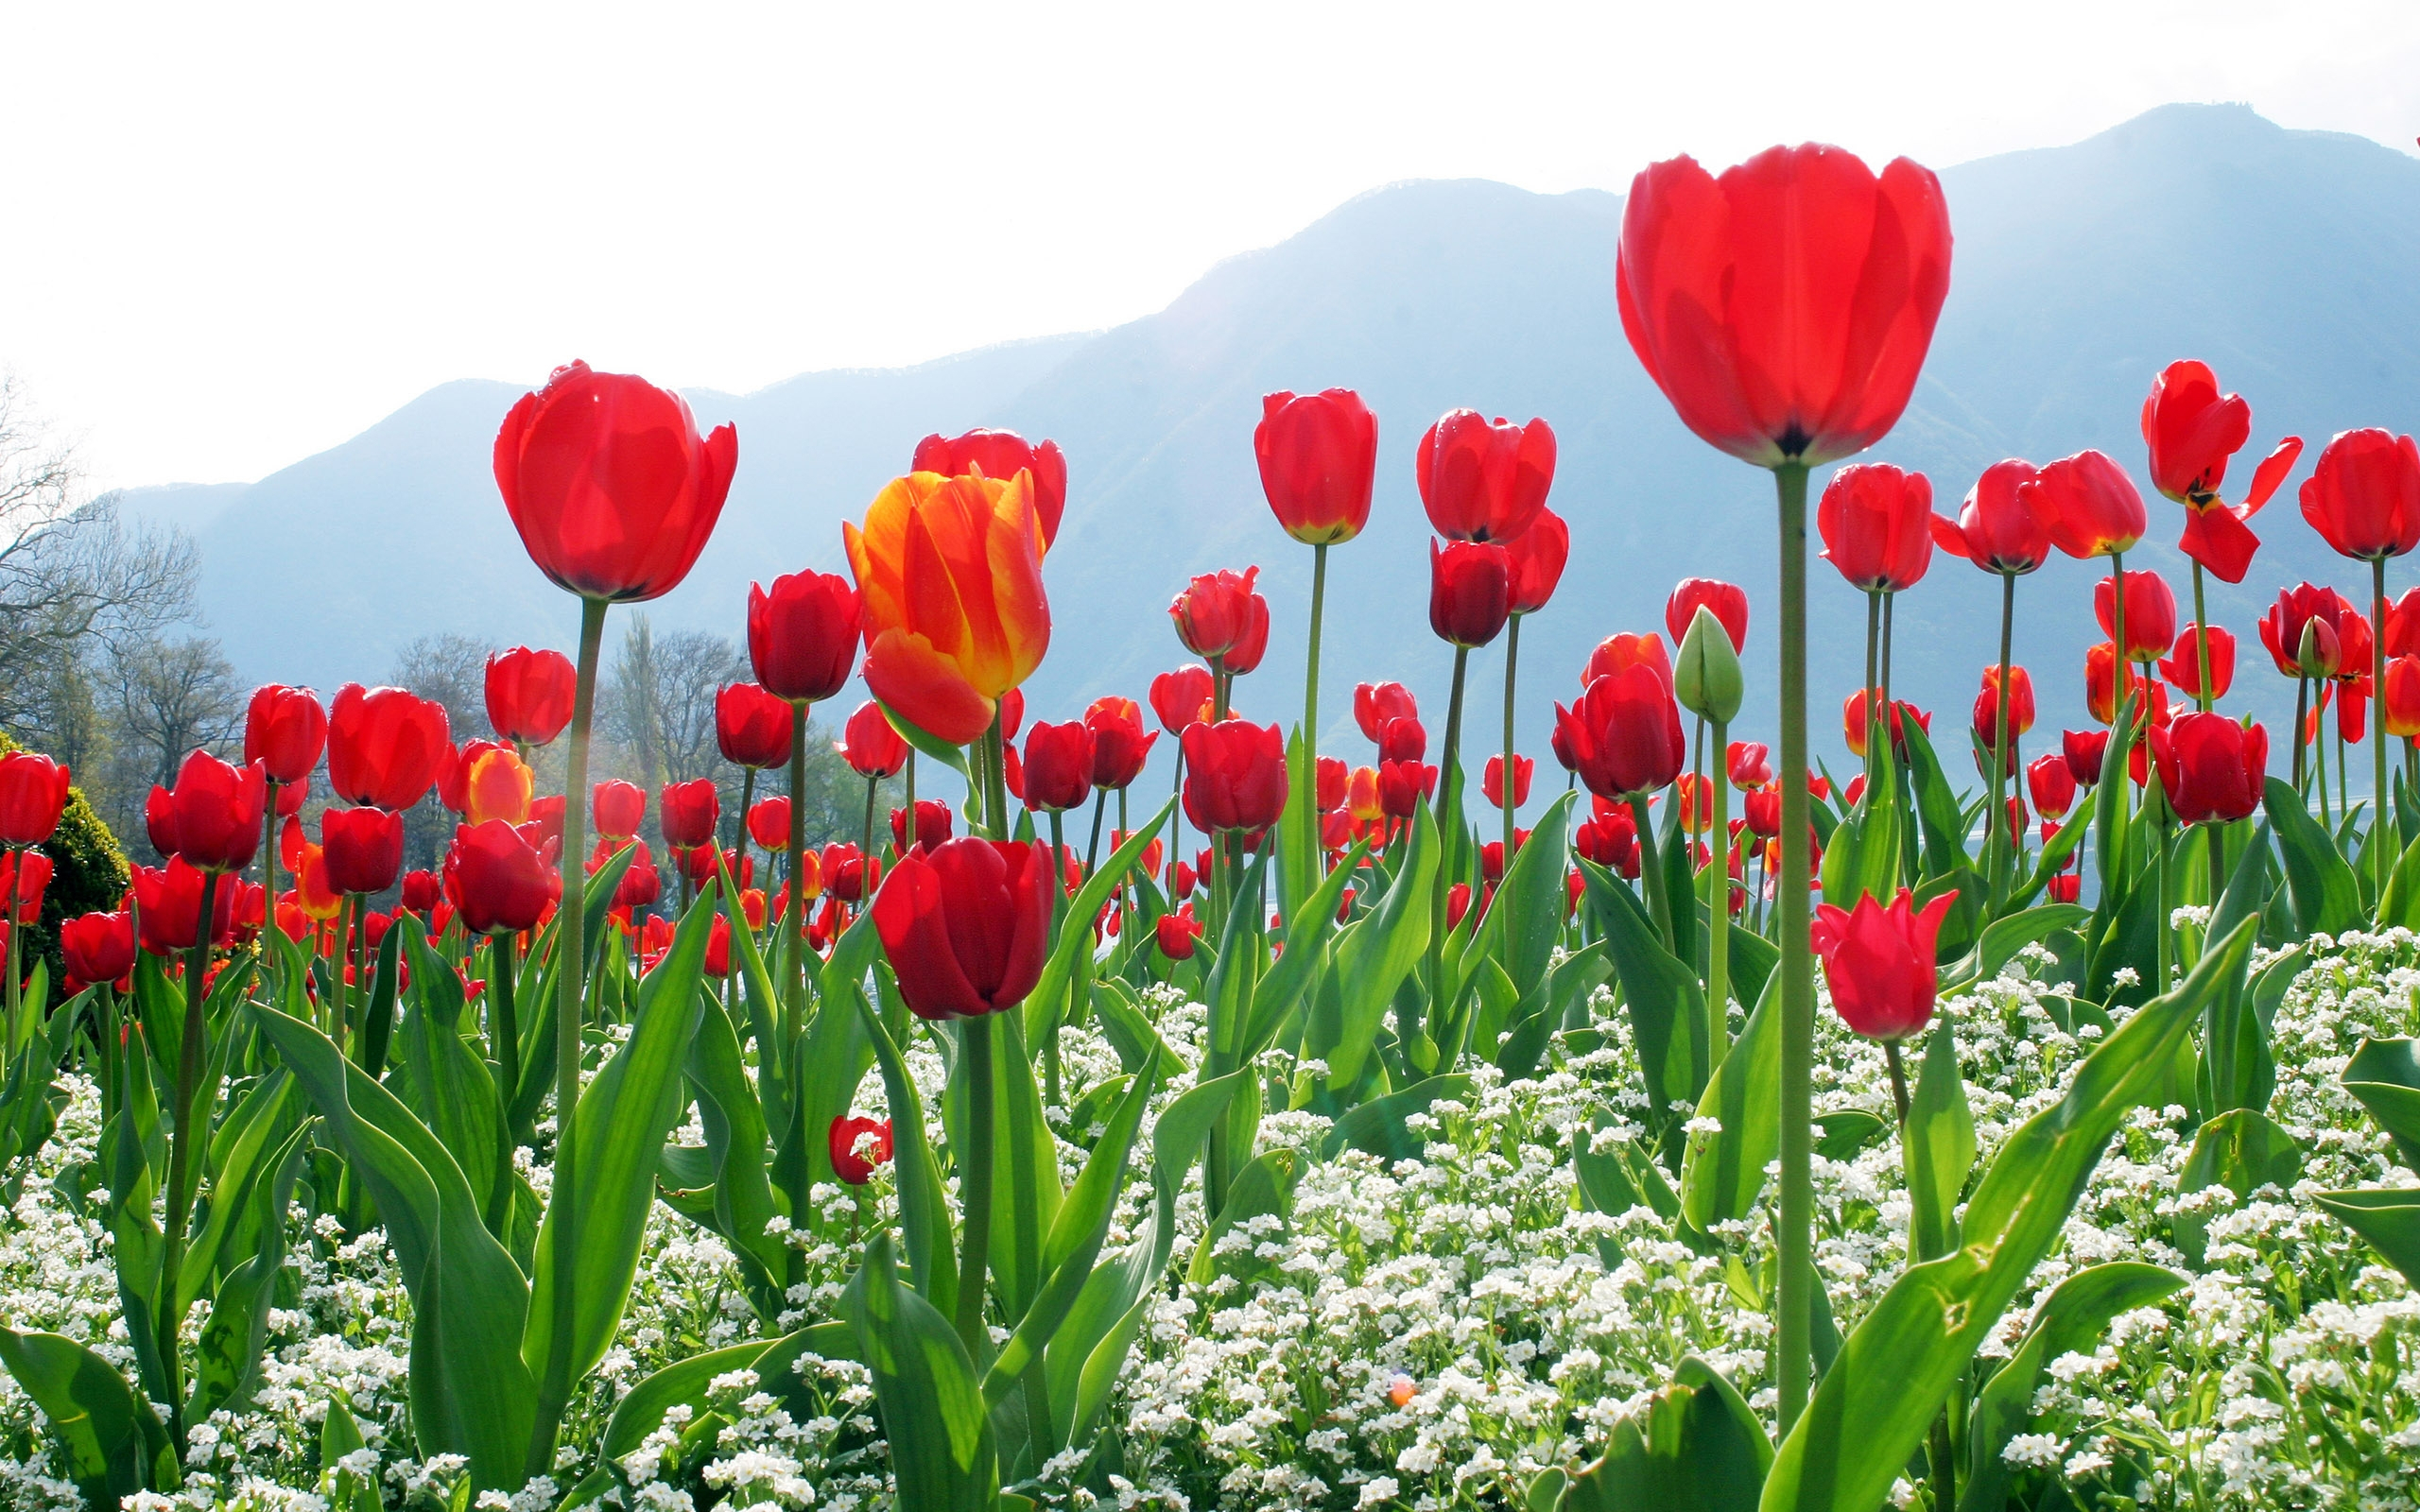 166172 descargar imagen tierra/naturaleza, tulipán, flor, flor roja, flores: fondos de pantalla y protectores de pantalla gratis